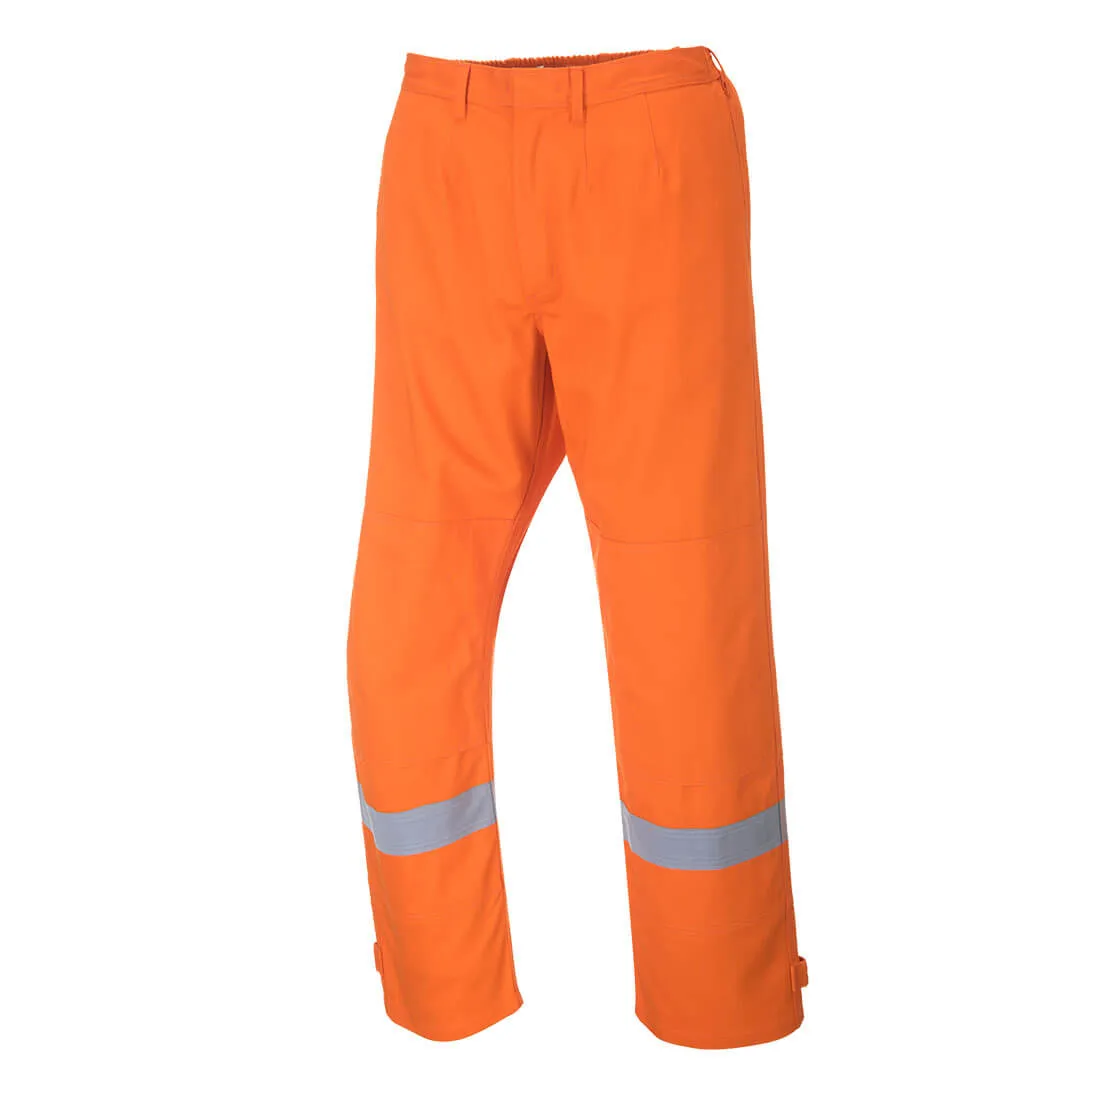 Biz Flame Plus Mens Flame Resistant Trousers - Orange, 4XL, 32"